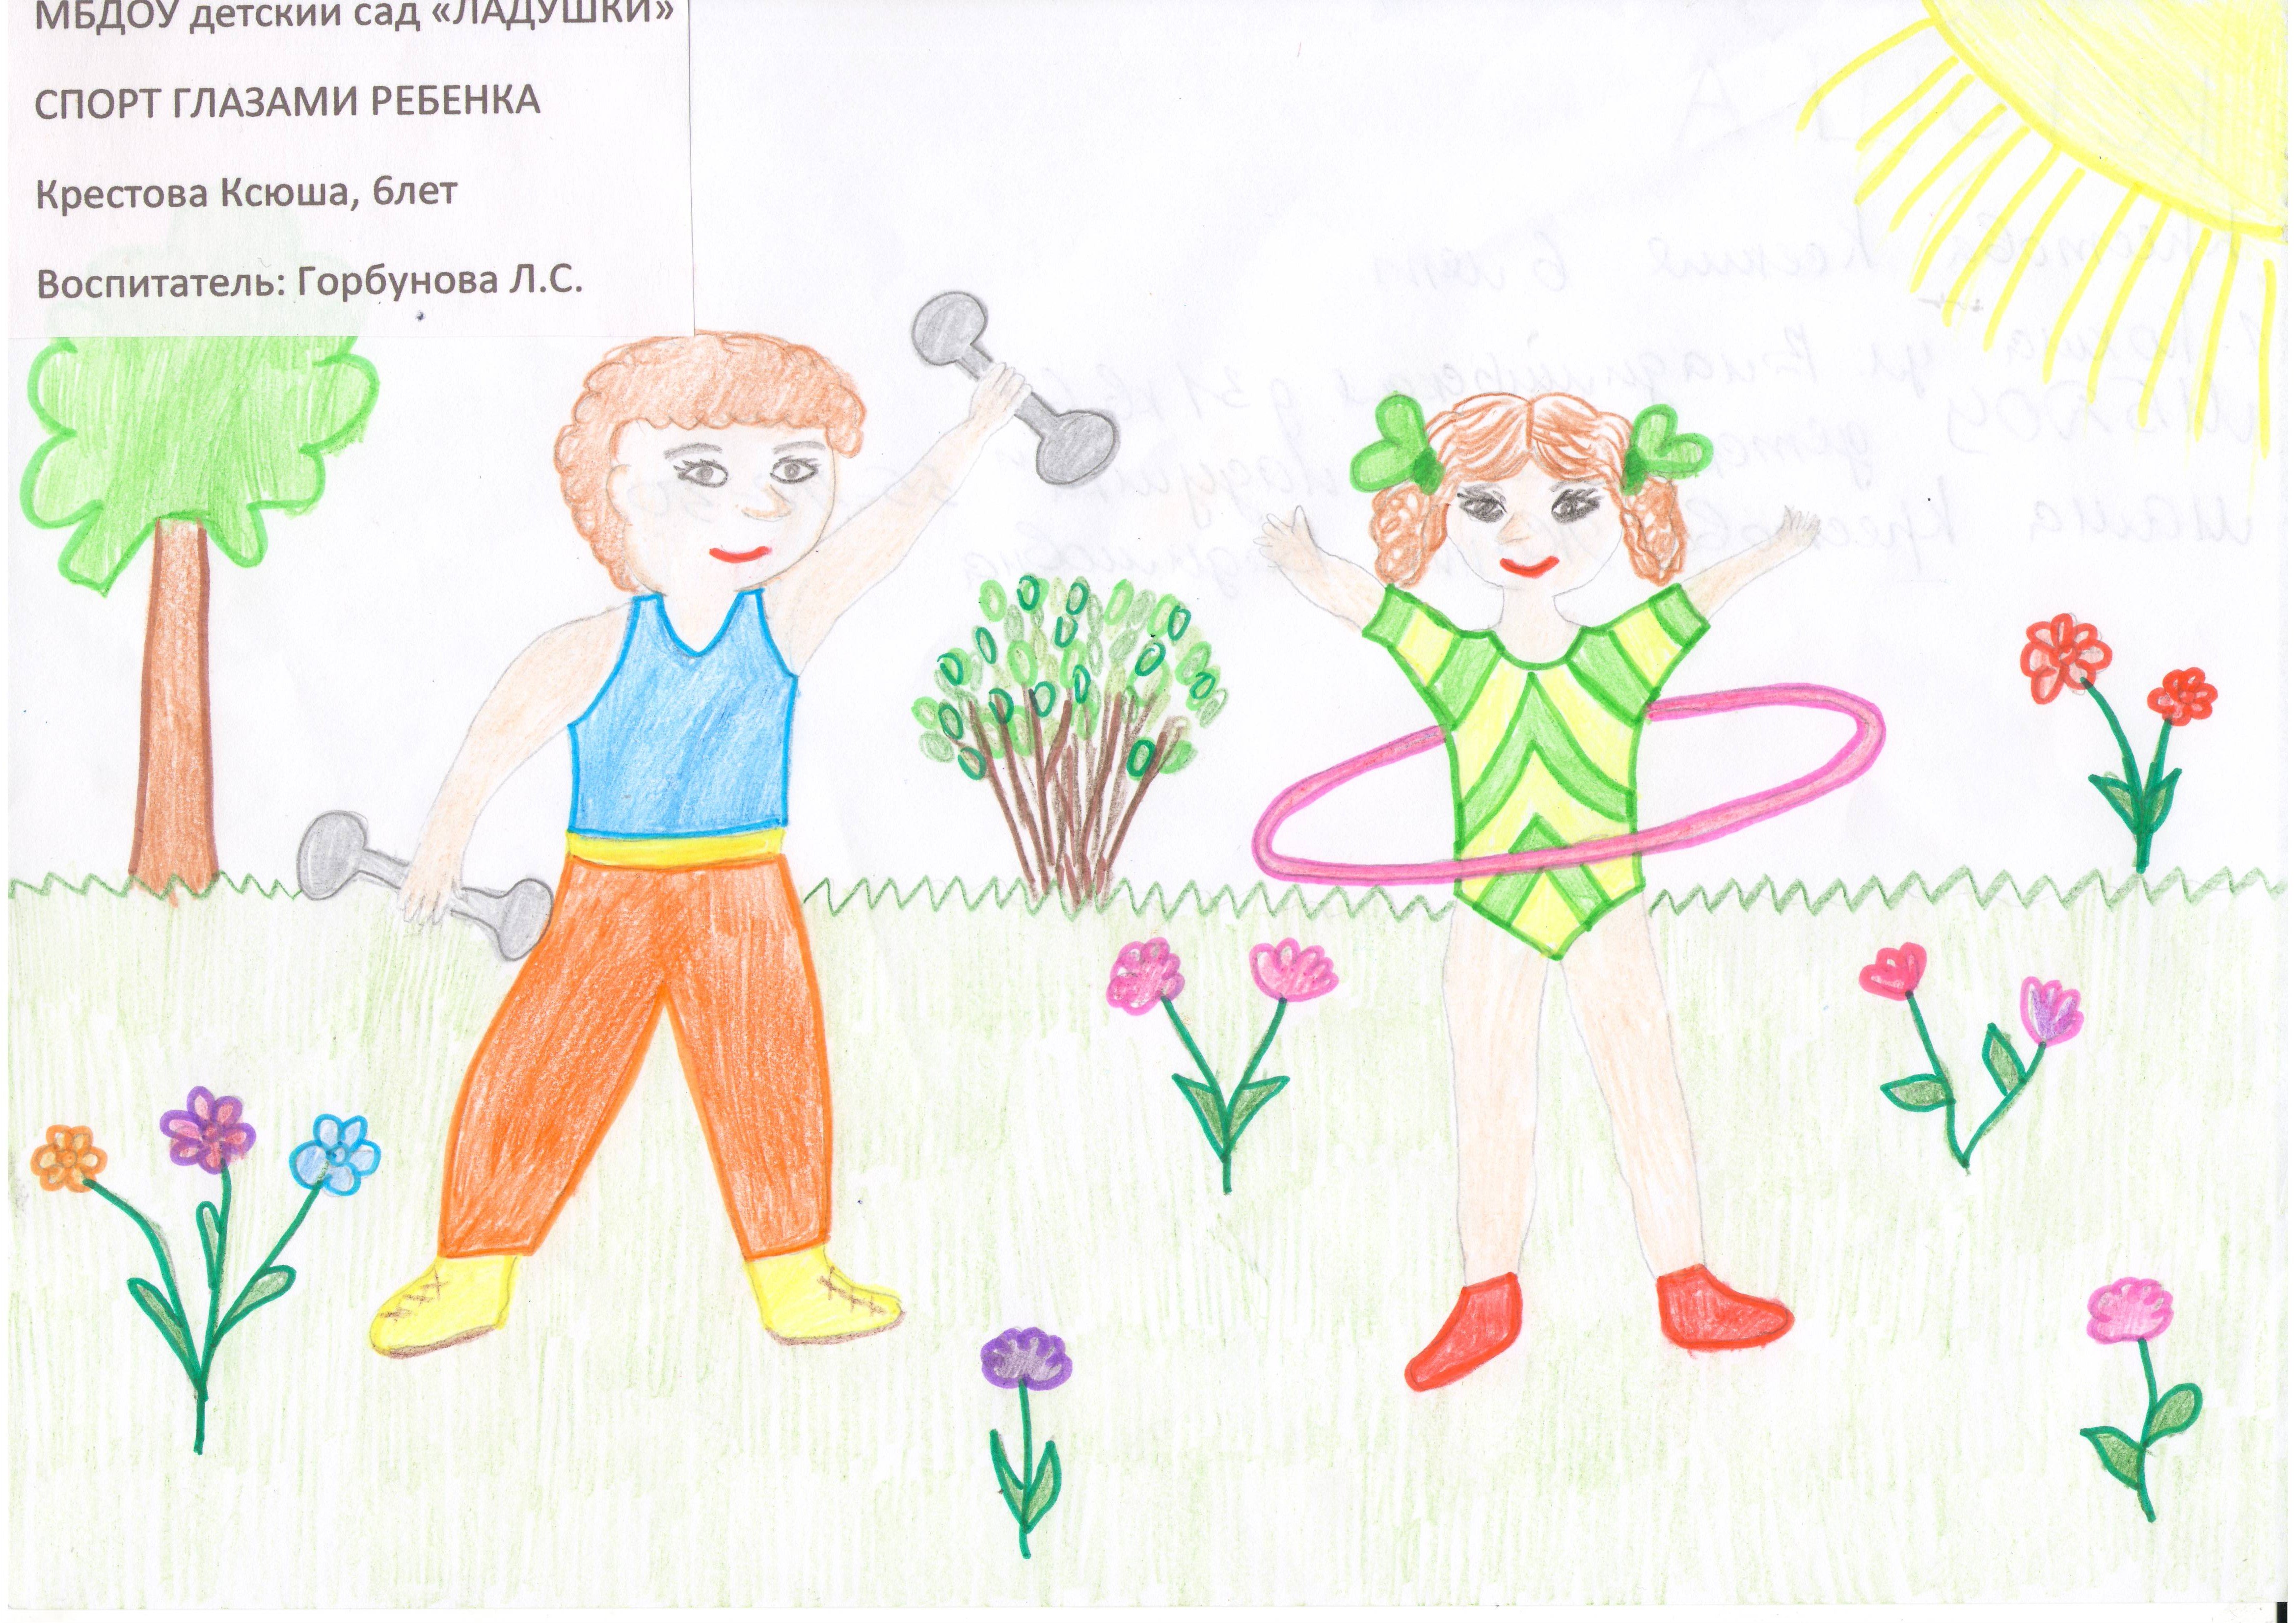 Рисунок про спорт в детский сад на конкурс